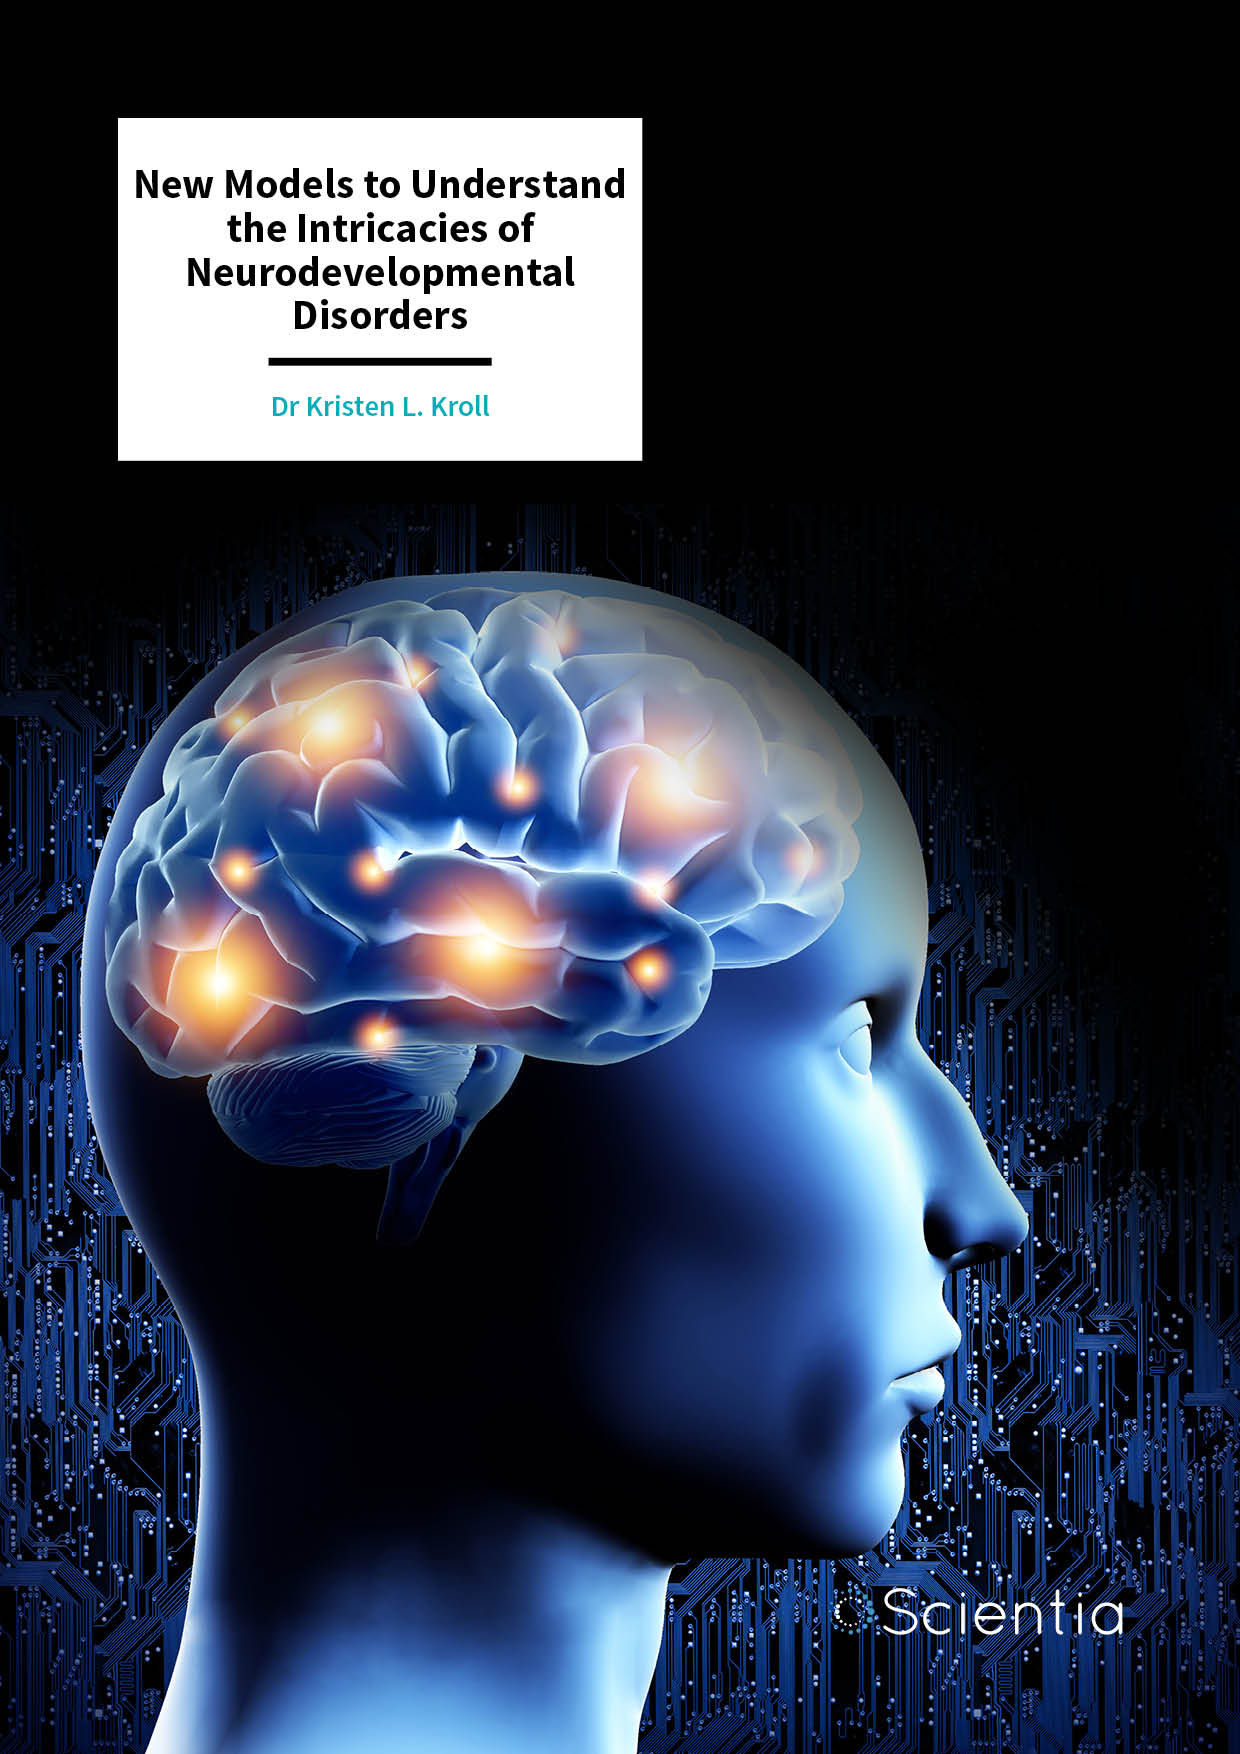 Dr Kristen Kroll – New Models to Understand the Intricacies of Neurodevelopmental Disorders